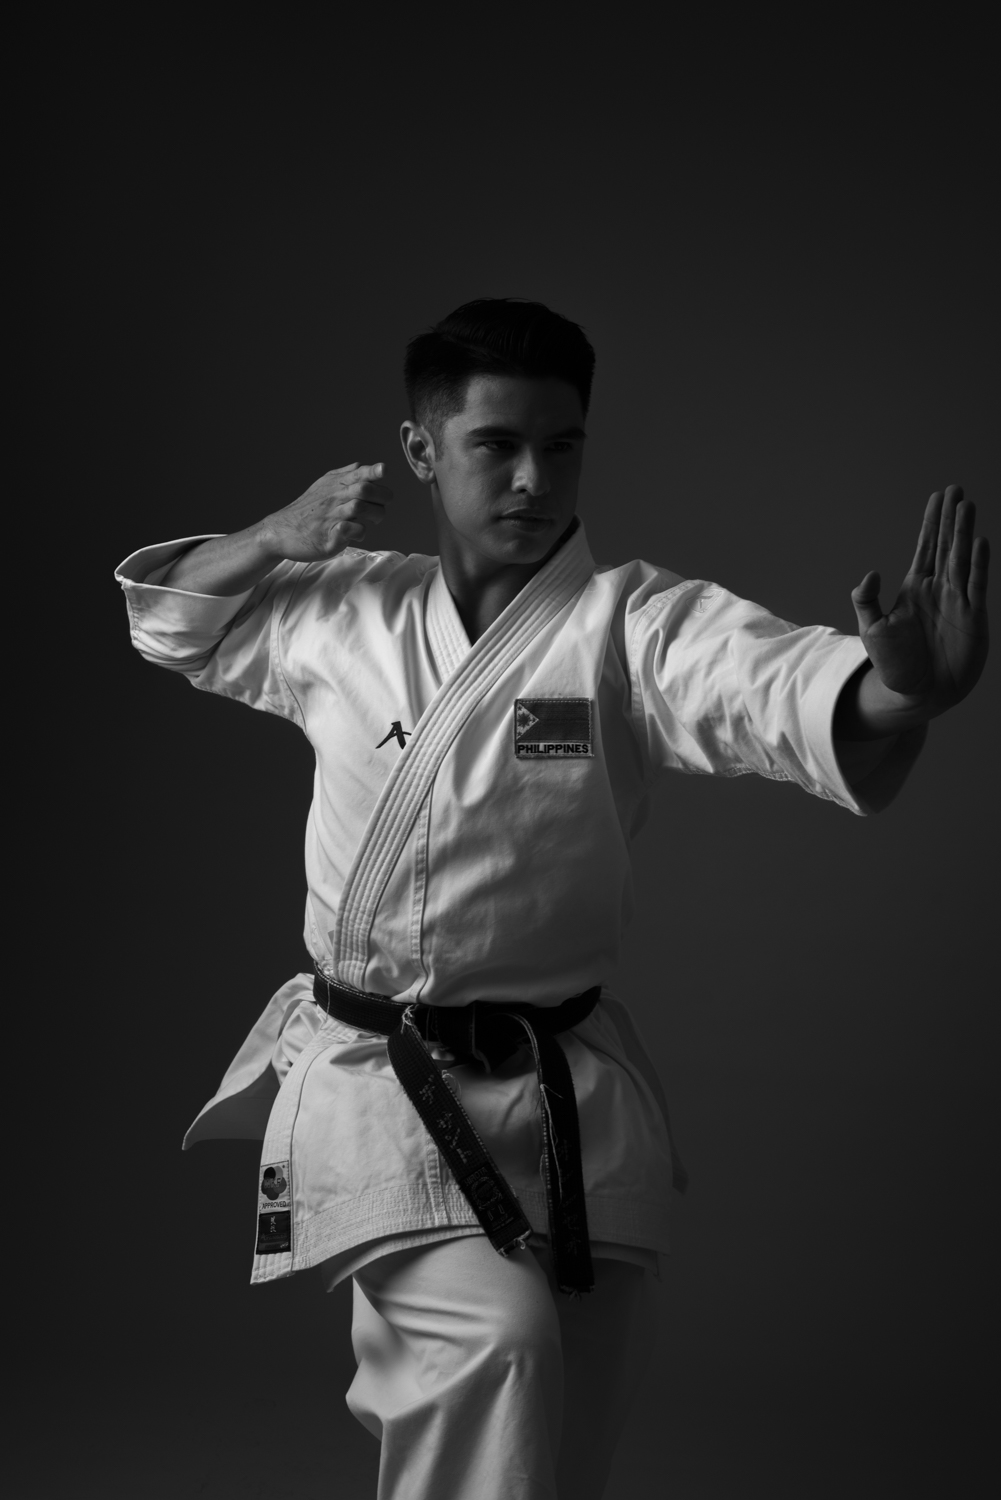 Karate can teach humility, self-control, and respect, says James De Los Santos